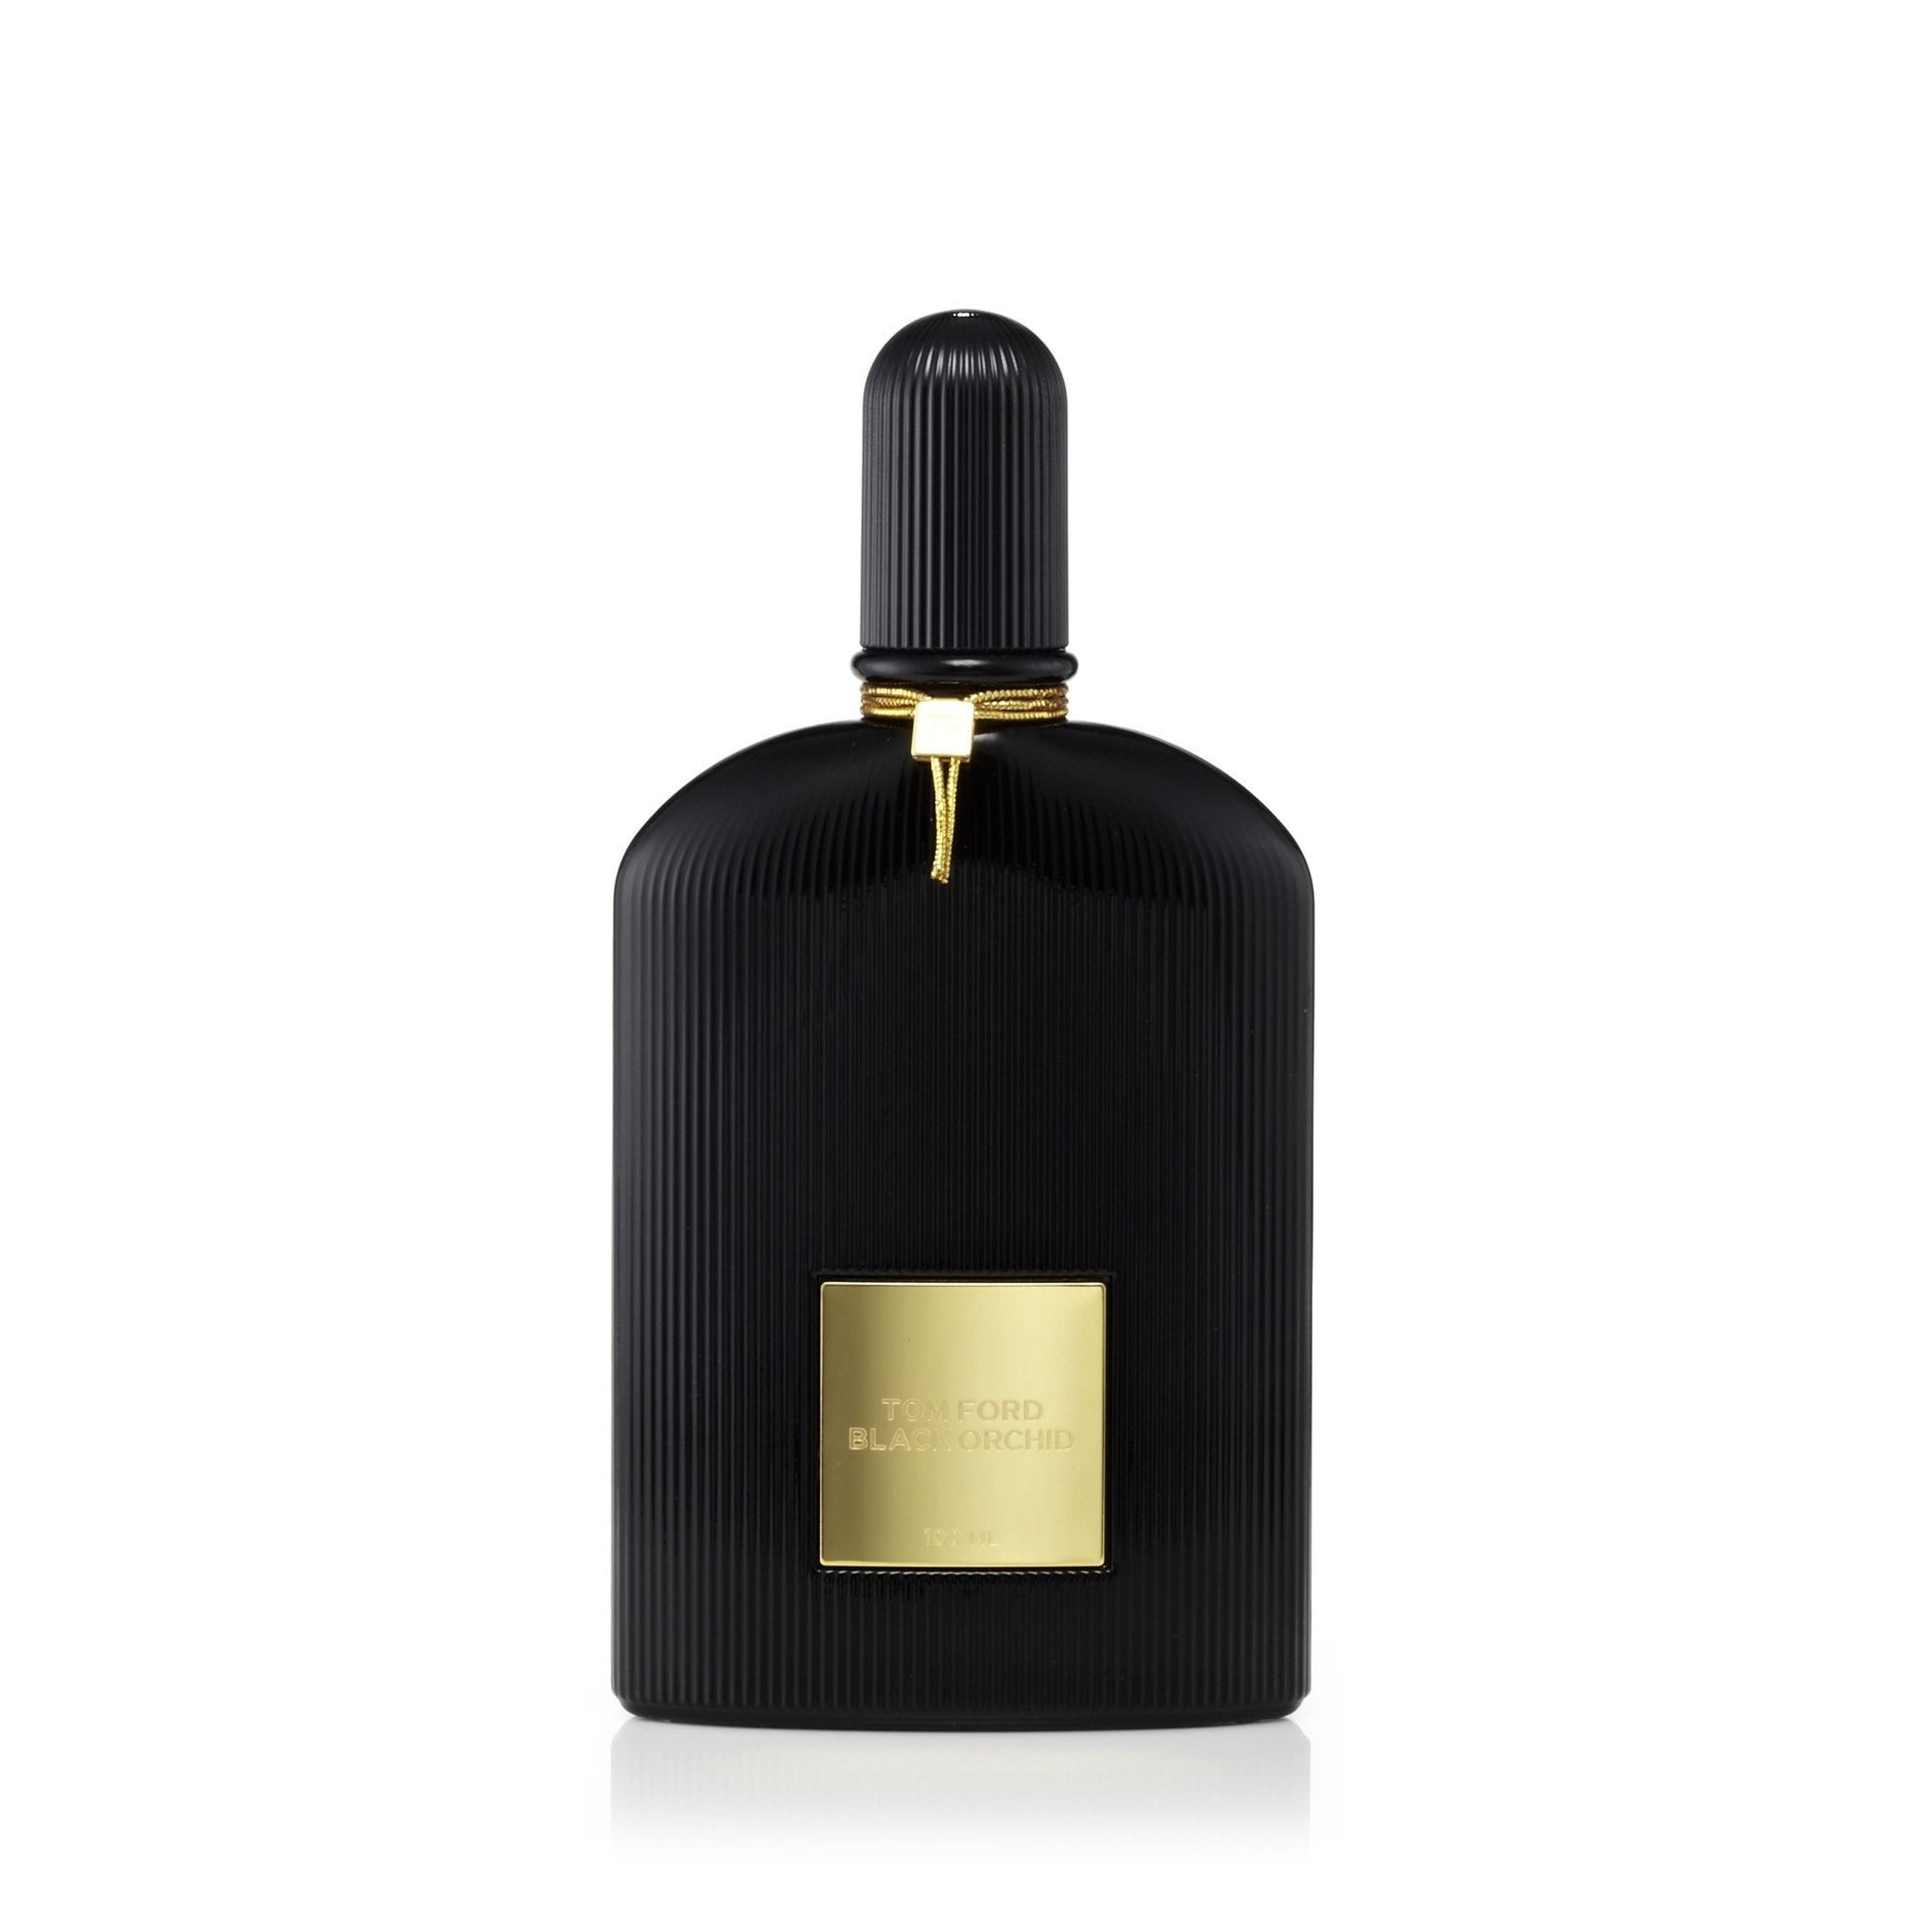 Tom Ford Black Orchid Eau de Parfum Womens Spray 3.4 oz. Click to open in modal